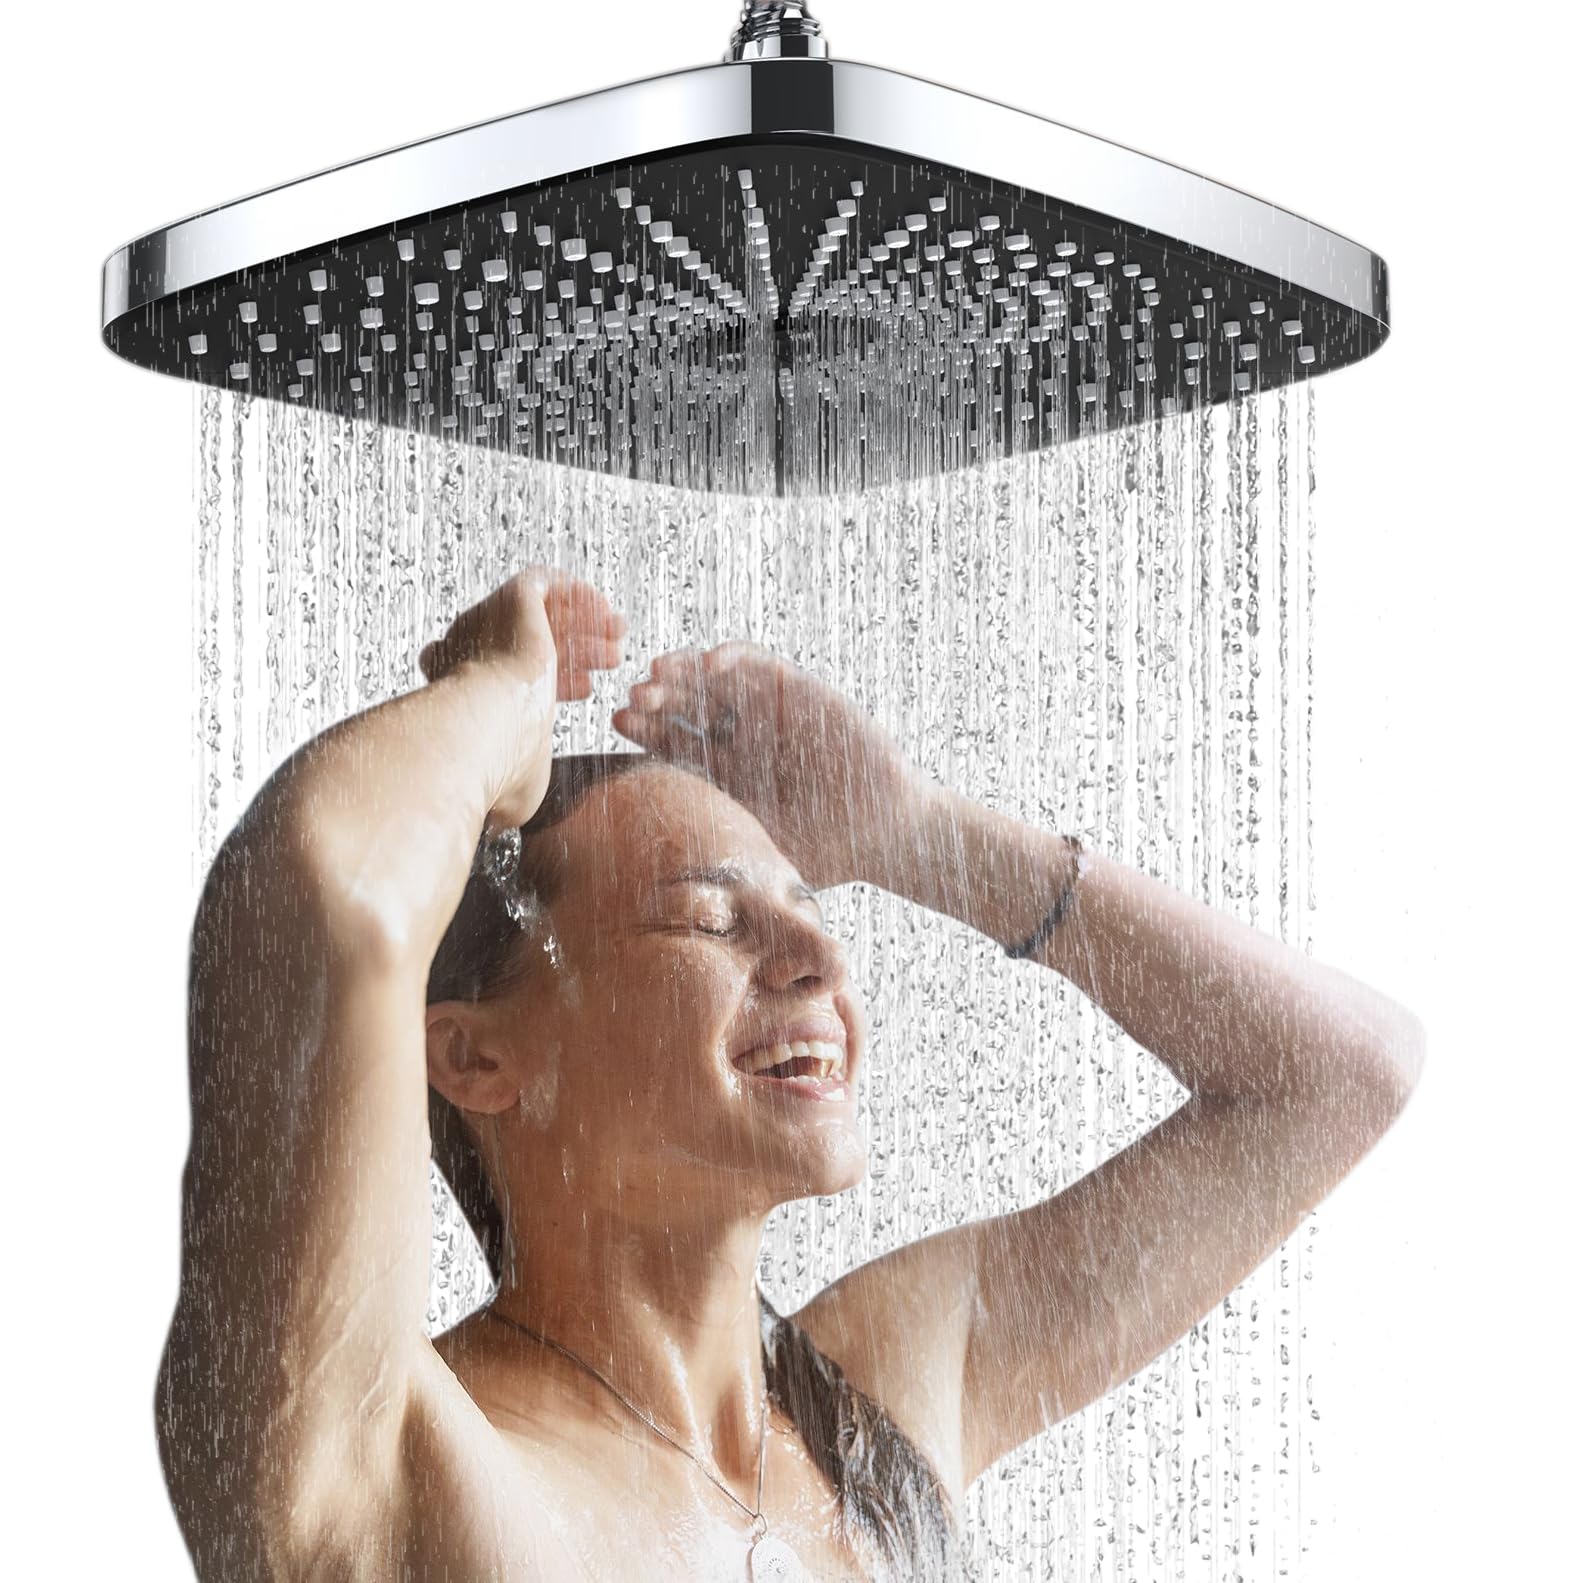 Veken 12" Rectangle Adjustable Rain Shower Head w/ Anti-Clog Nozzles (2 Colors) $10.99